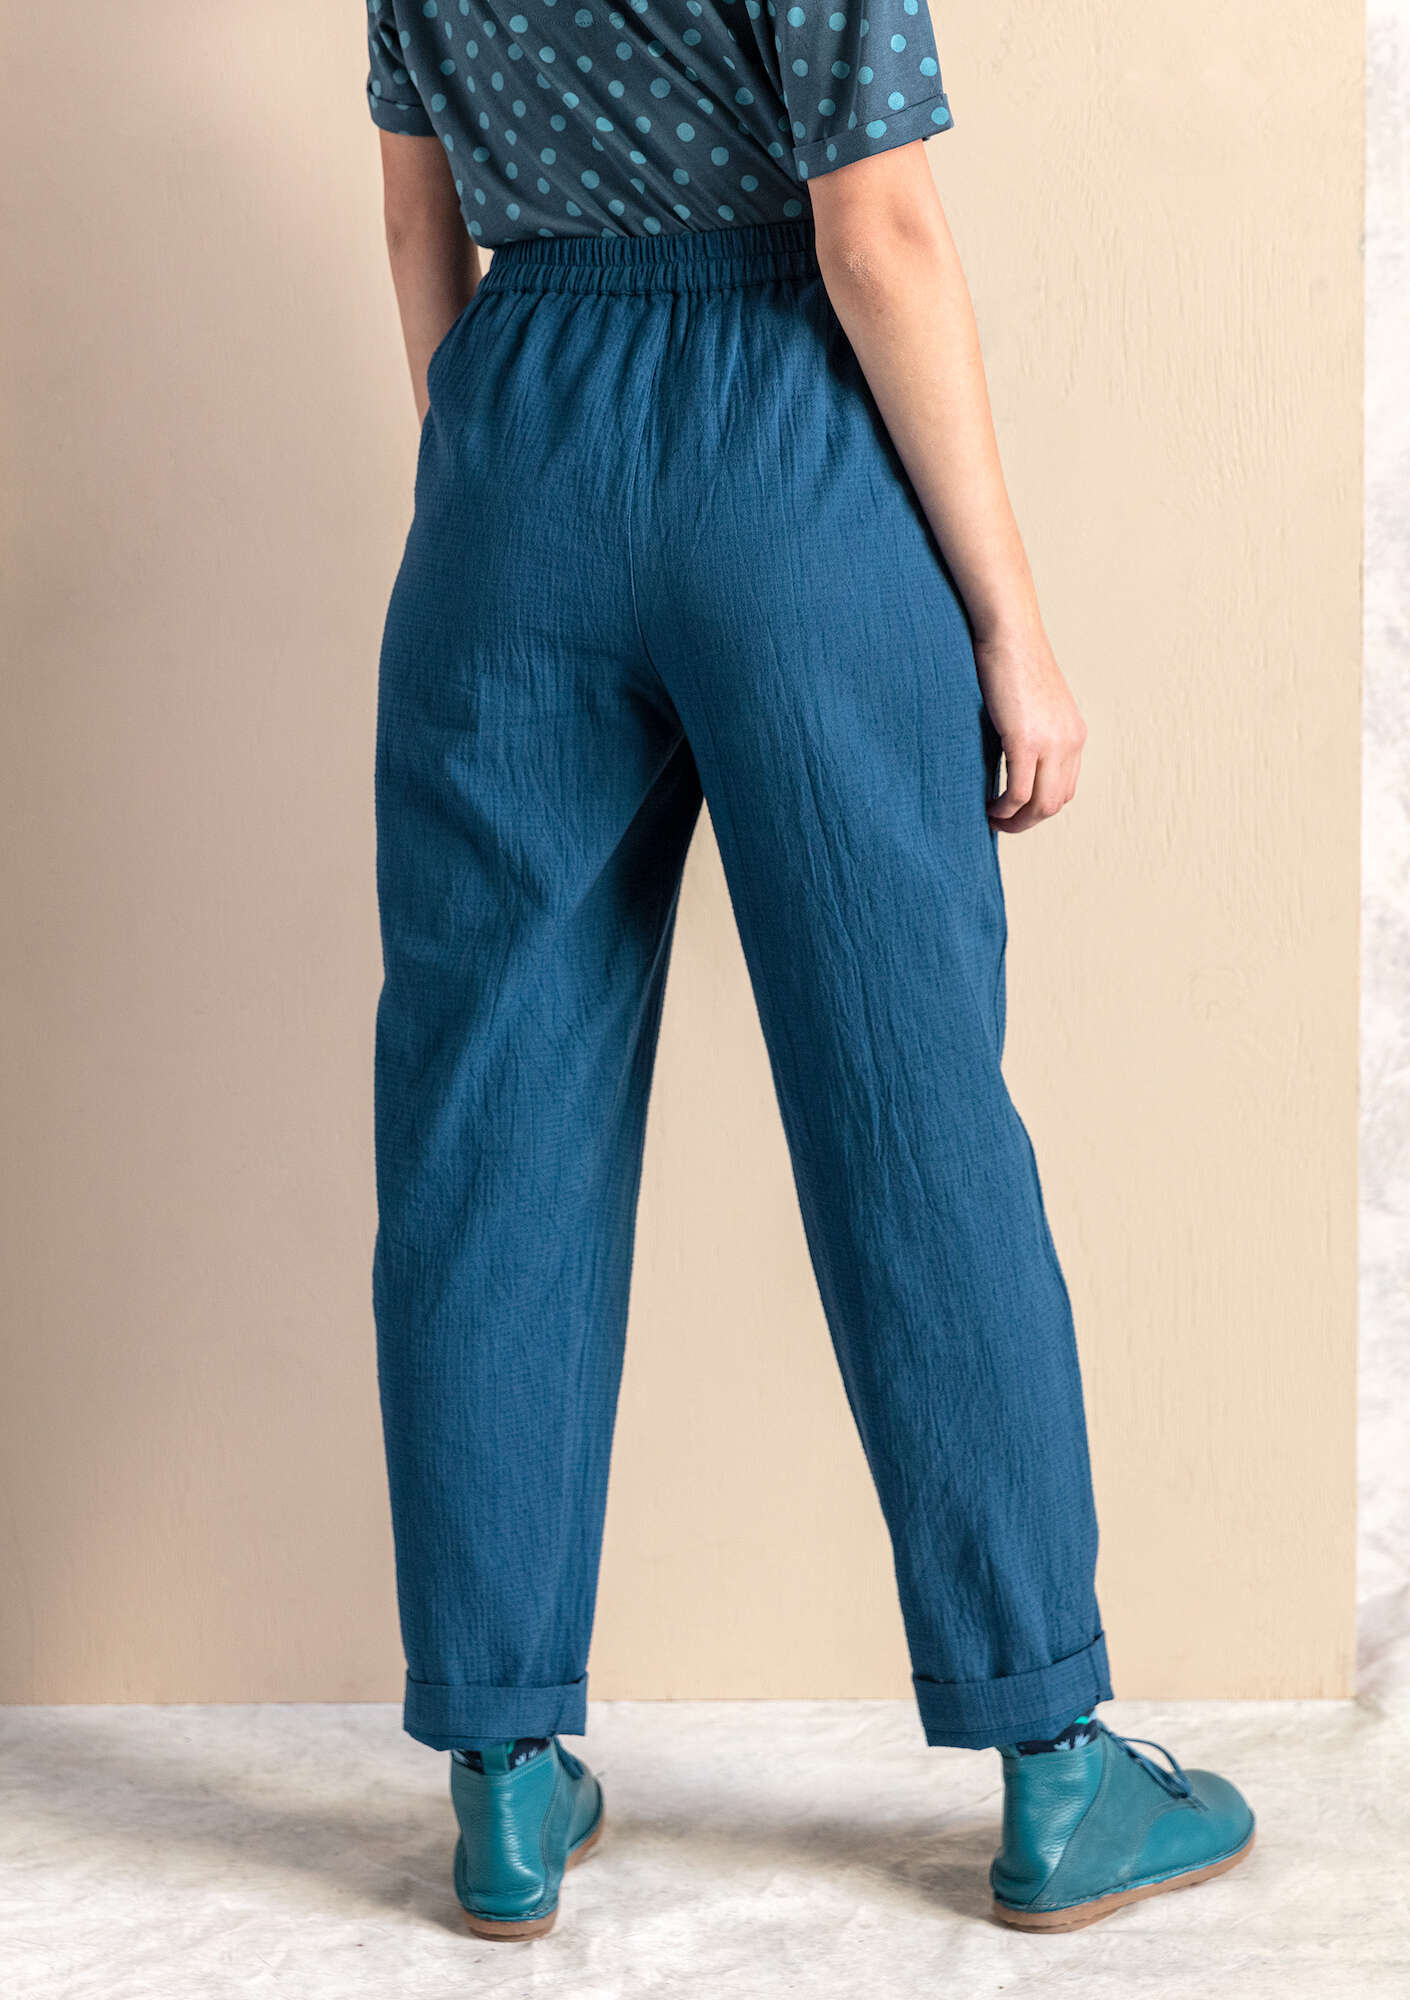 Woven pants in organic cotton indigo